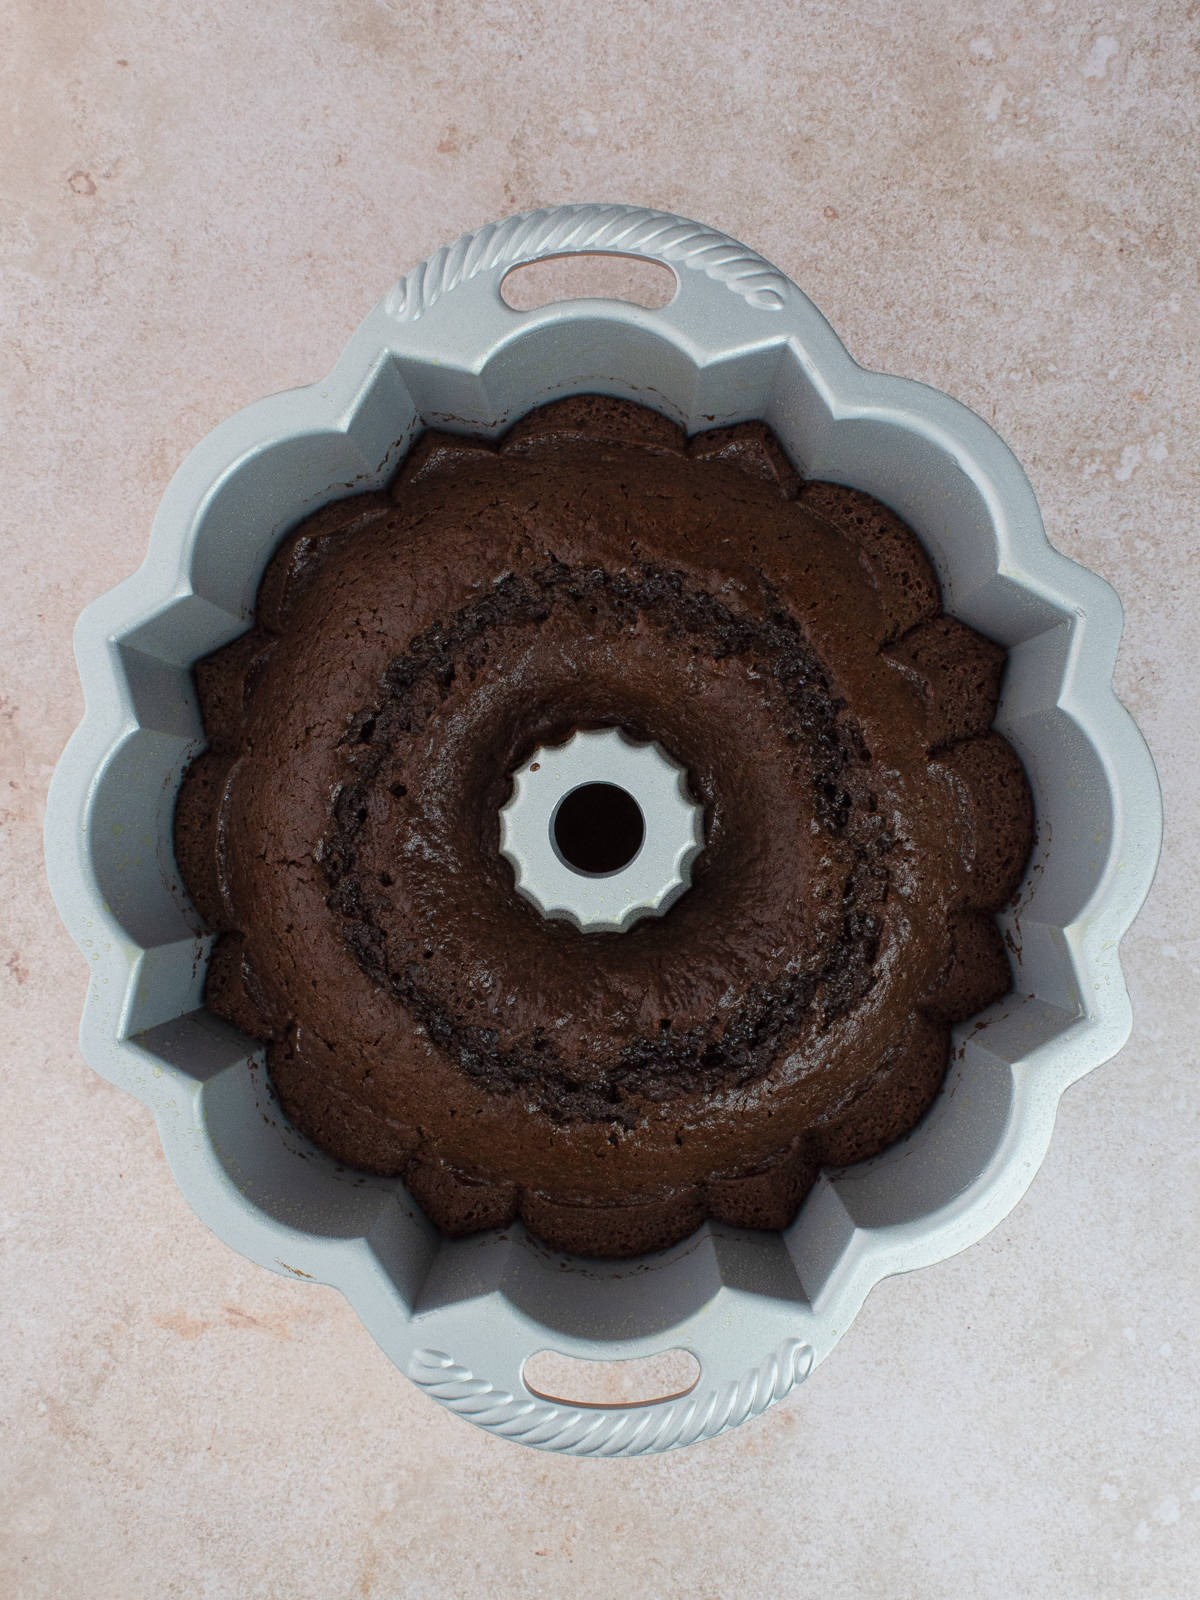 Baked chocolate olive oil cake in bundt pan